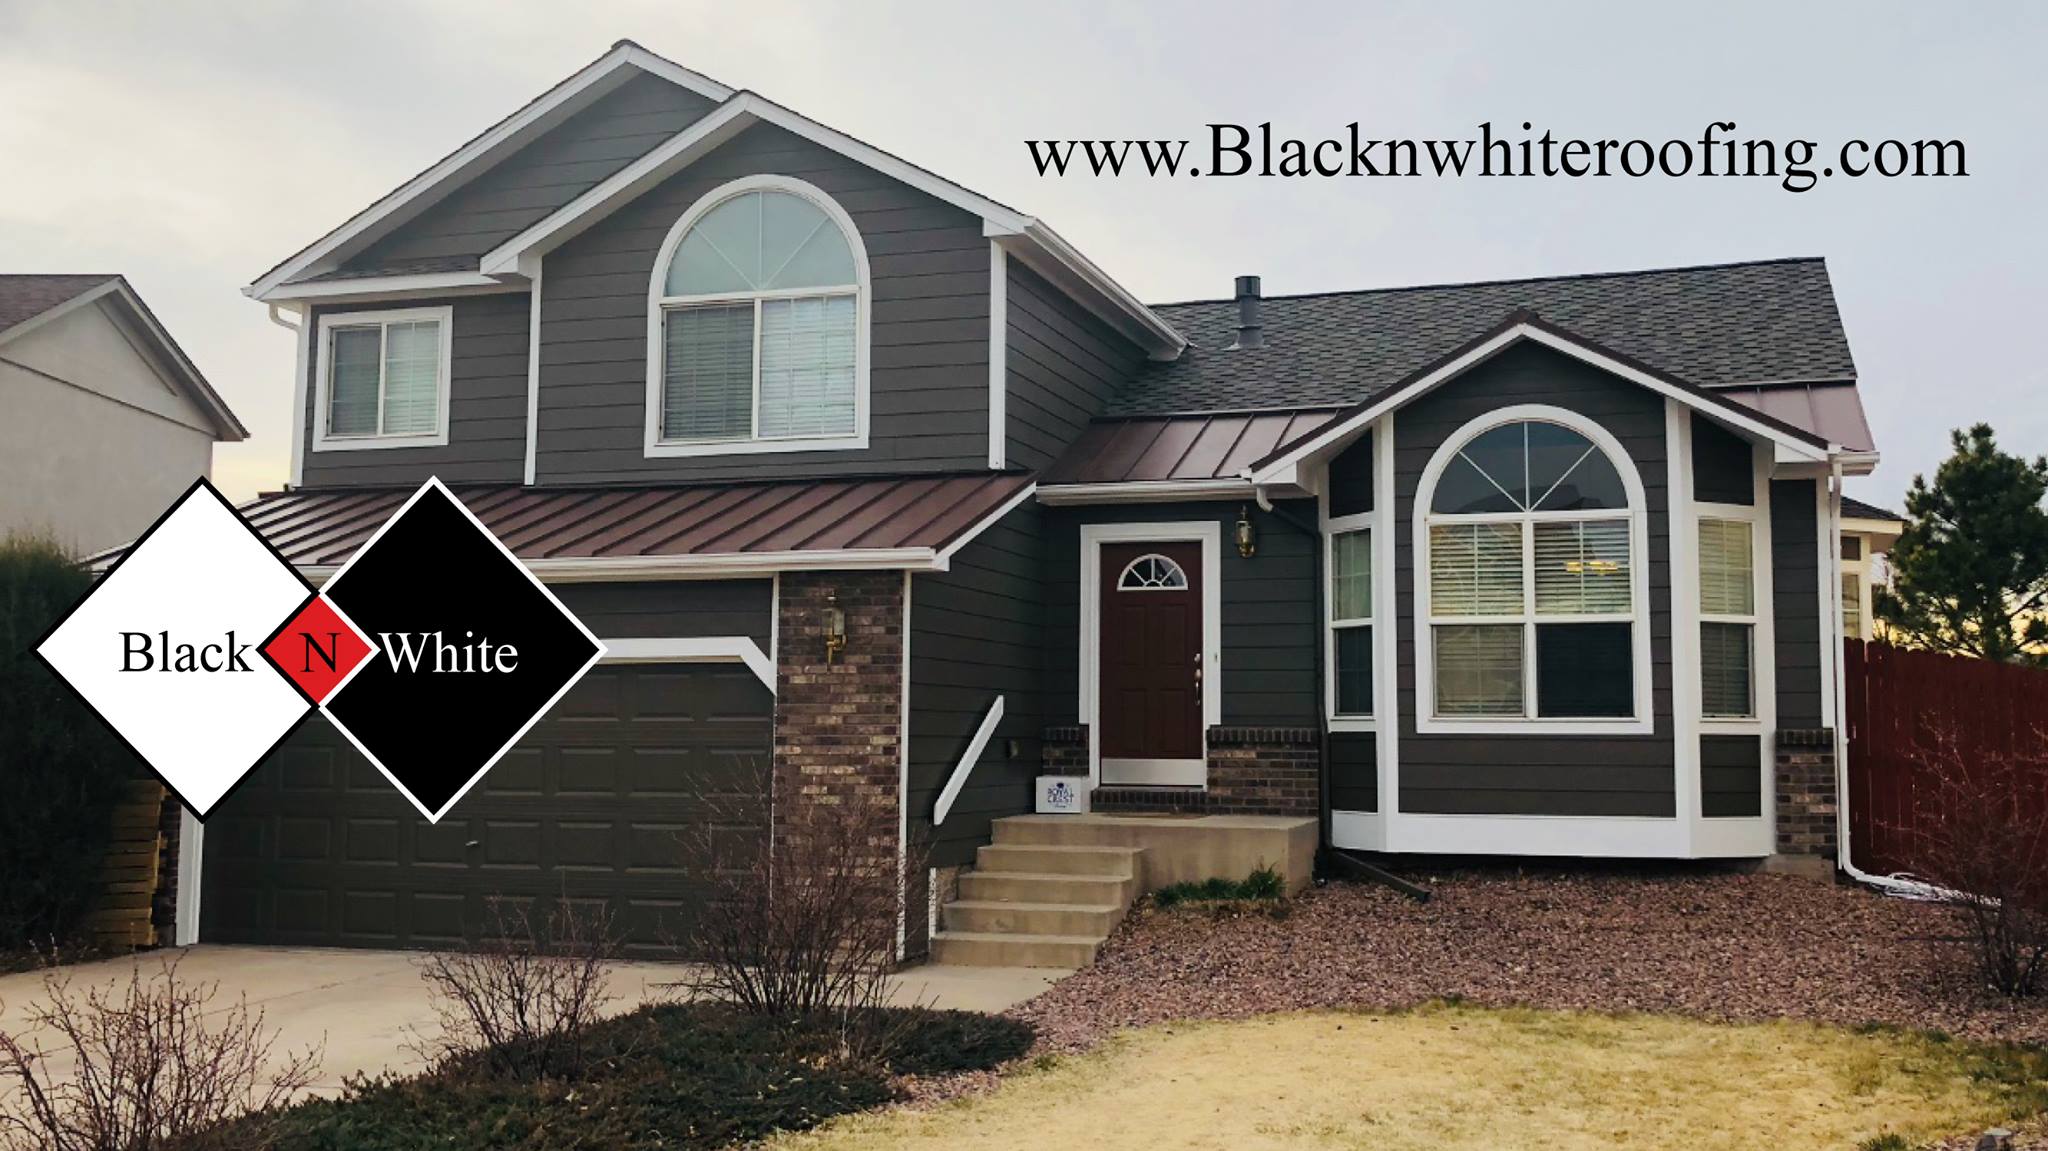 Black N White Roofing & Exteriors 2849 Ferber Dr, Colorado Springs Colorado 80916